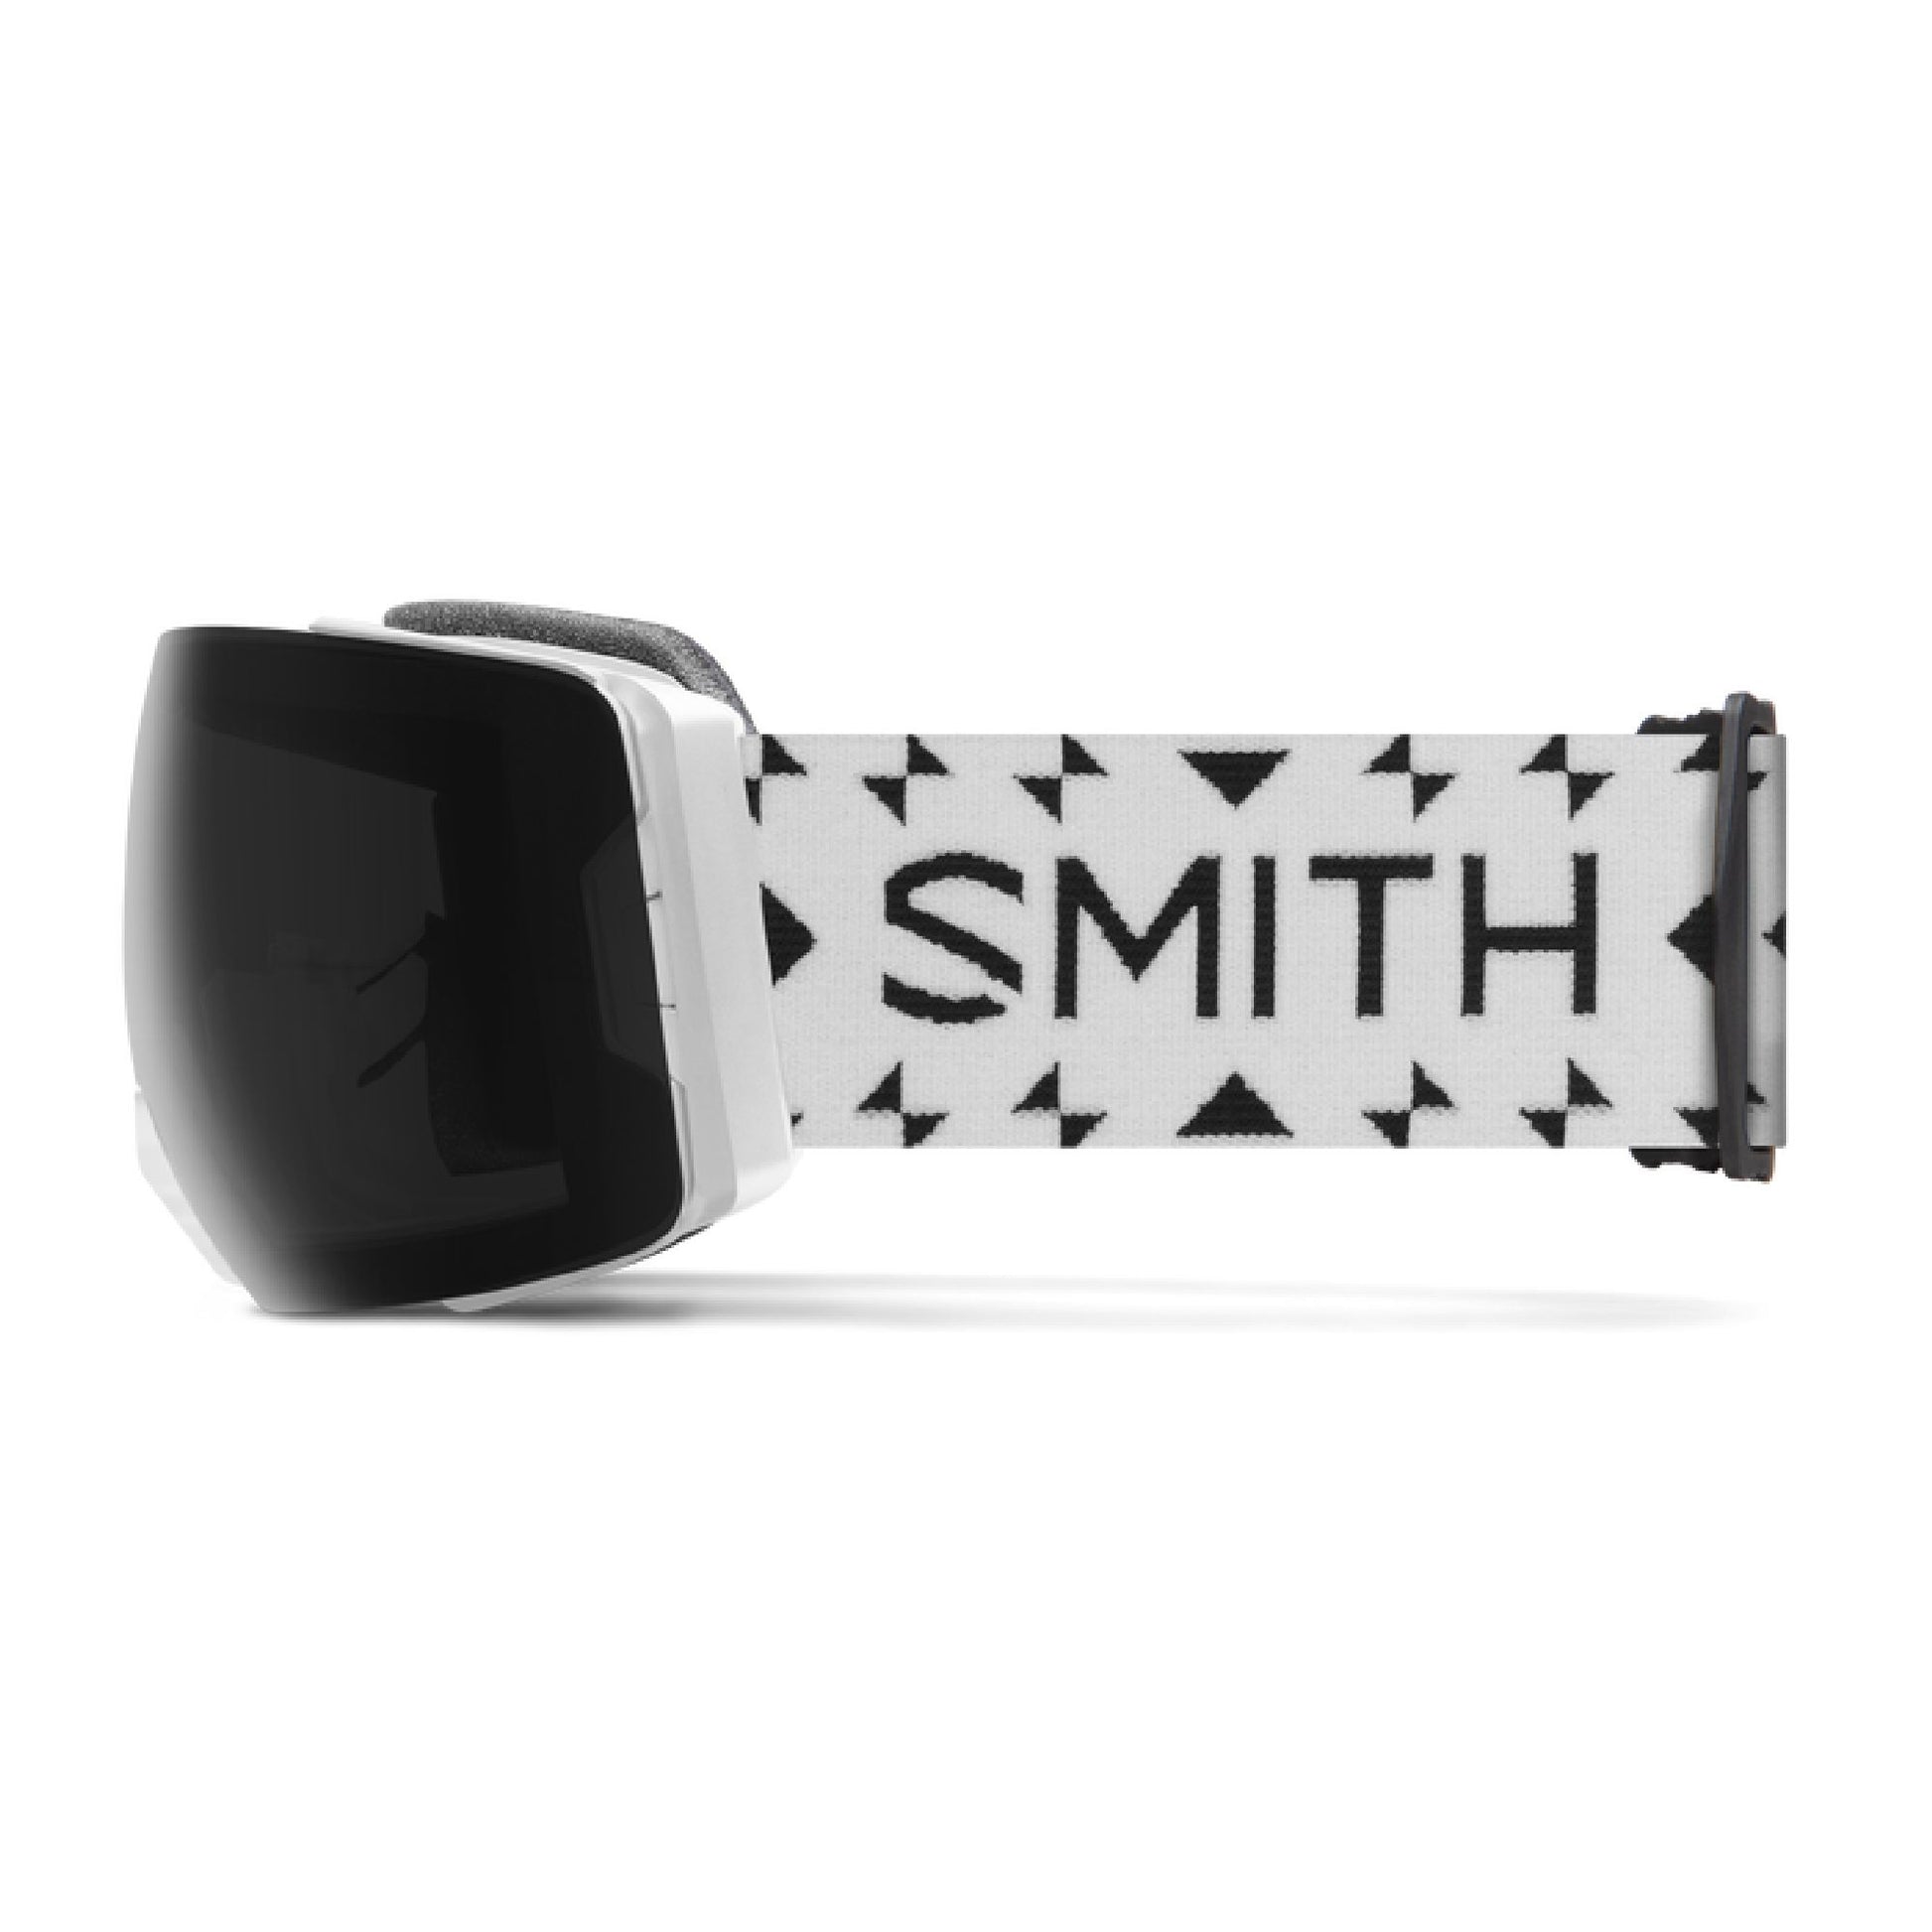 Smith I/O MAG XL Snow Goggle Trilogy ChromaPop Sun Black Snow Goggles